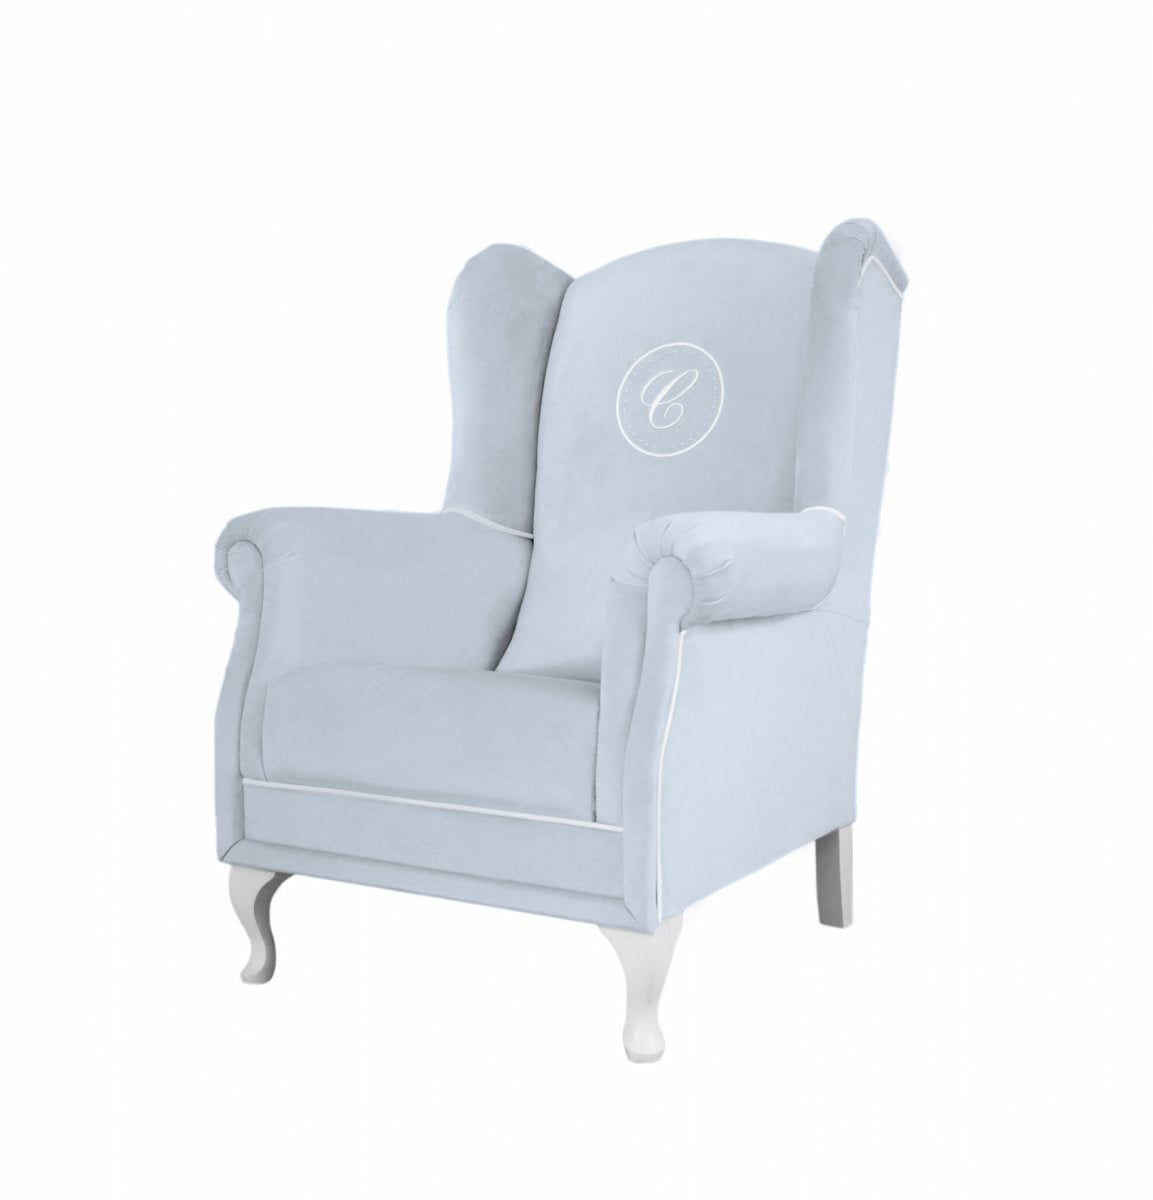 Blue Armchair with Emblem